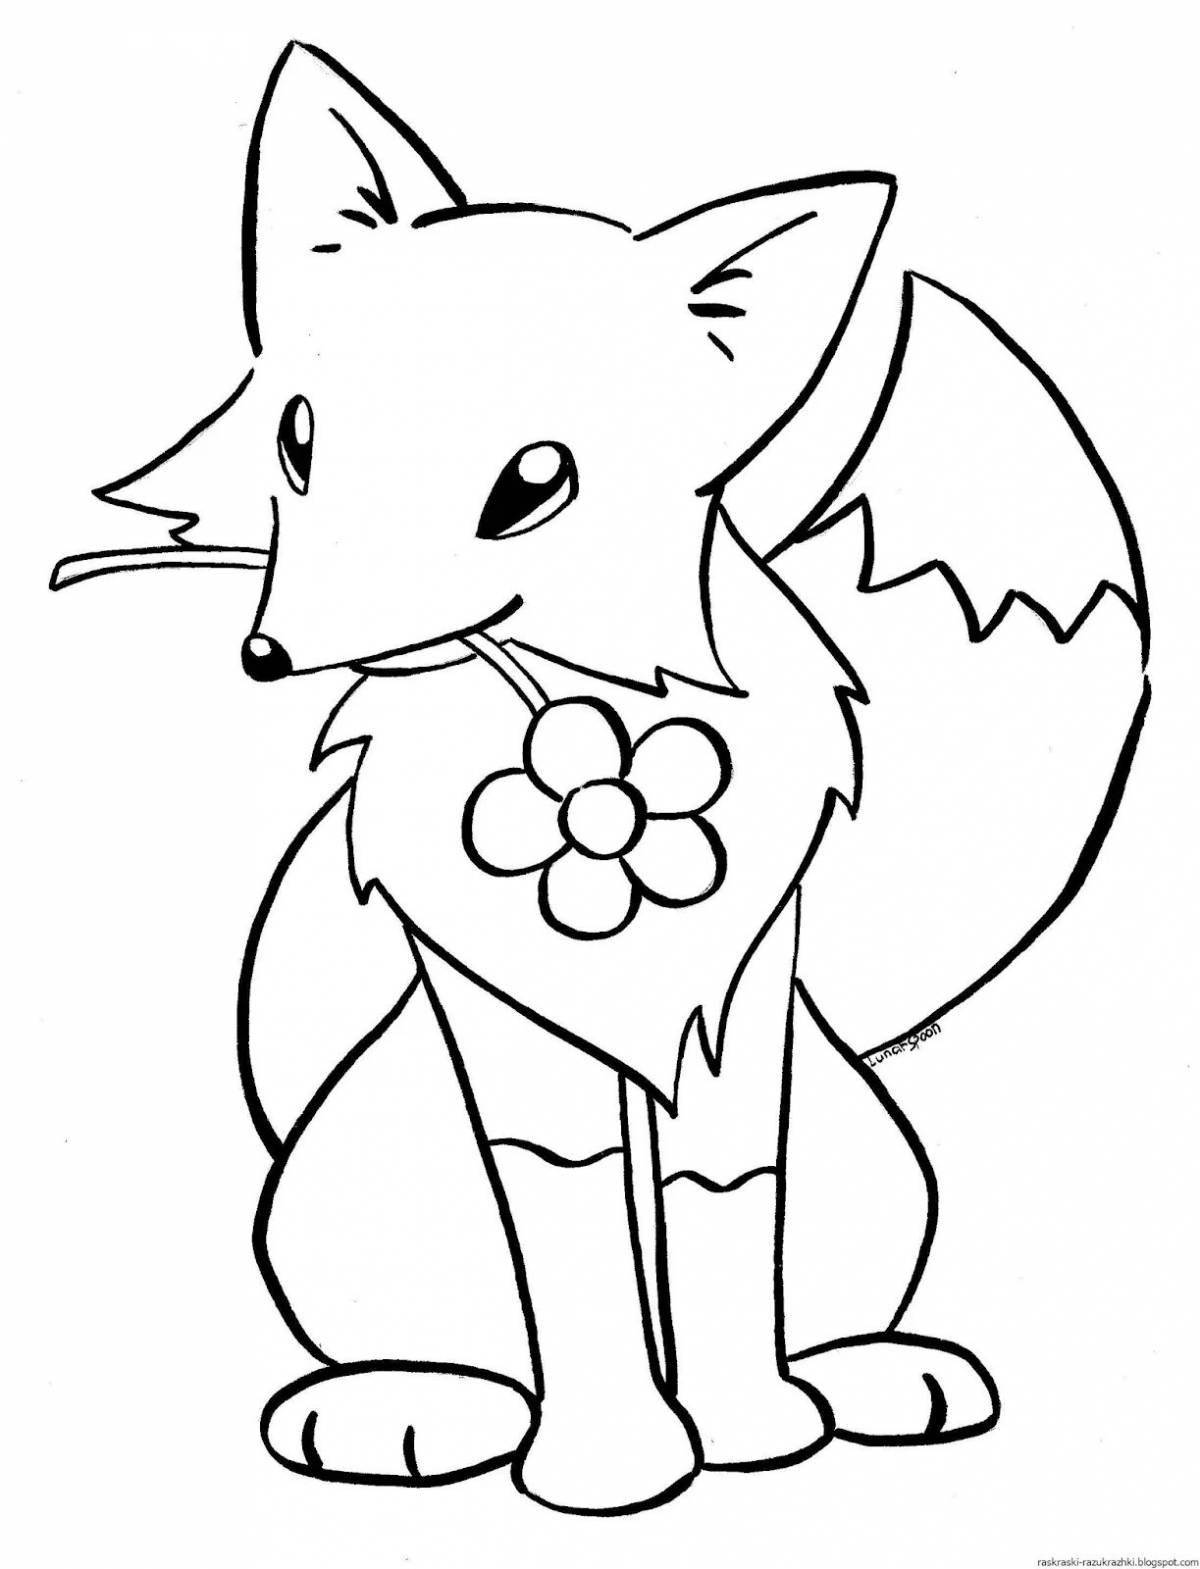 Coloring book shiny fox